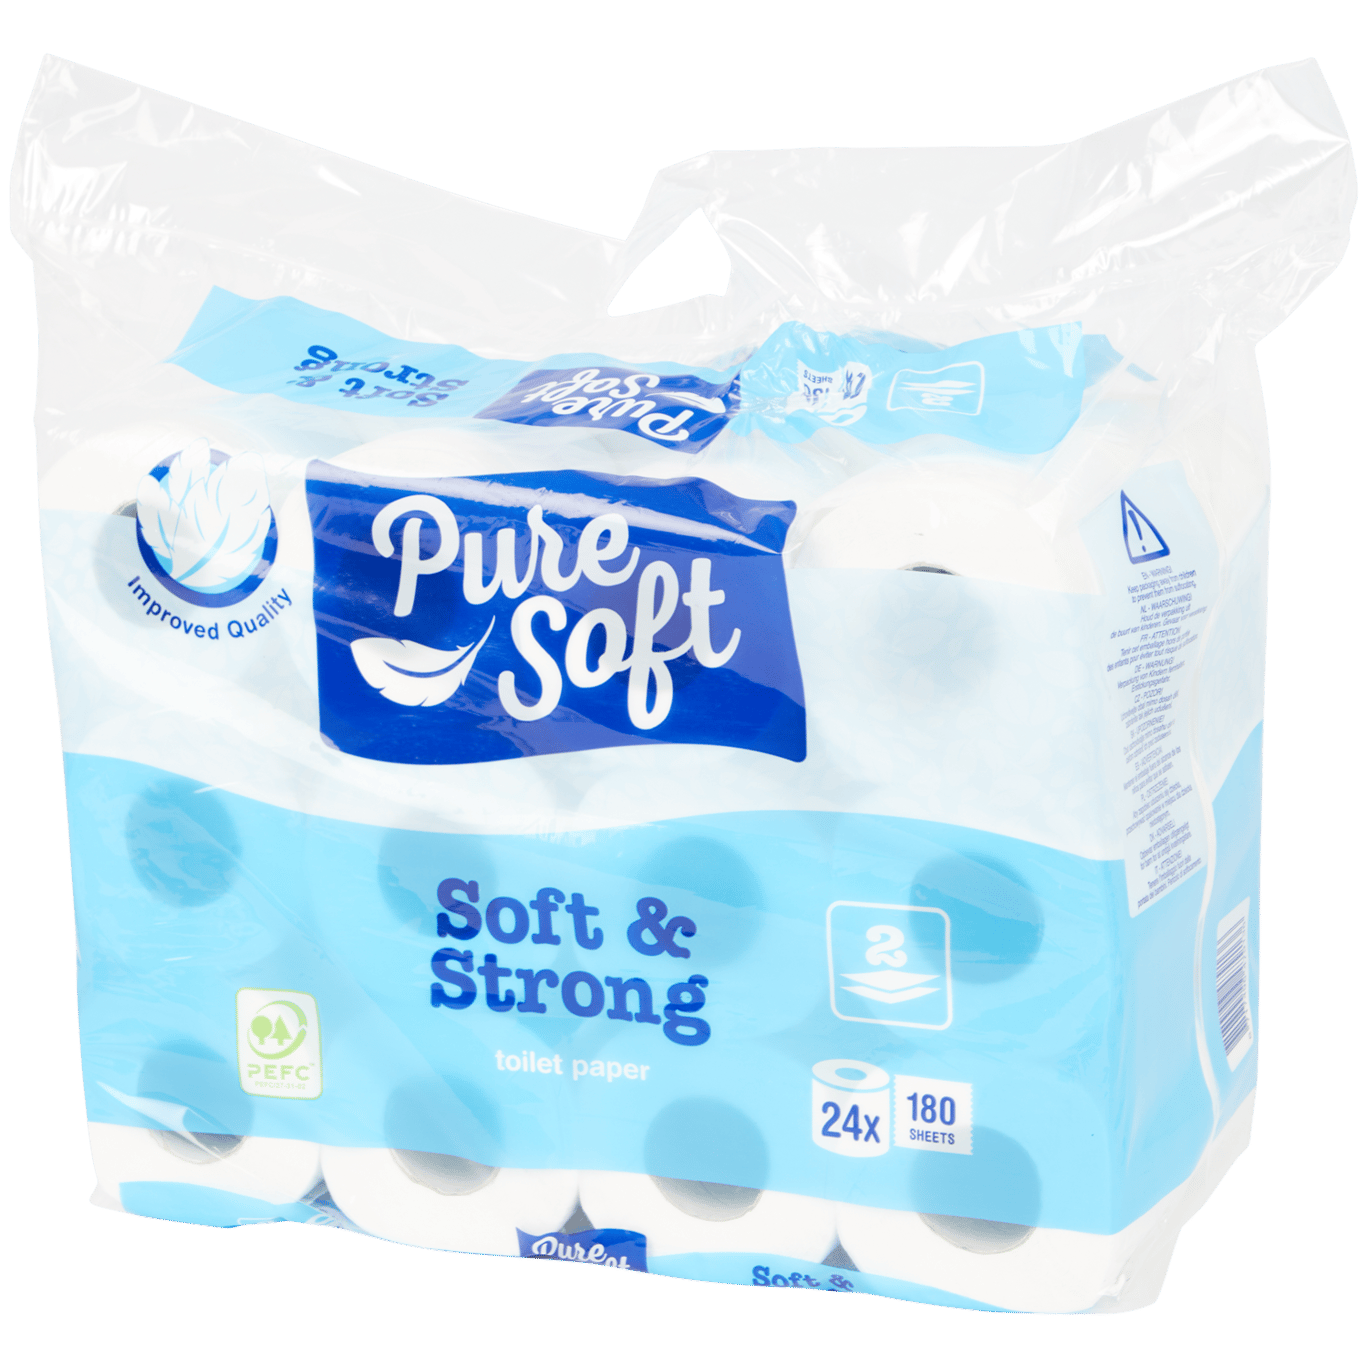 Pure Soft toiletpapier Soft & Strong